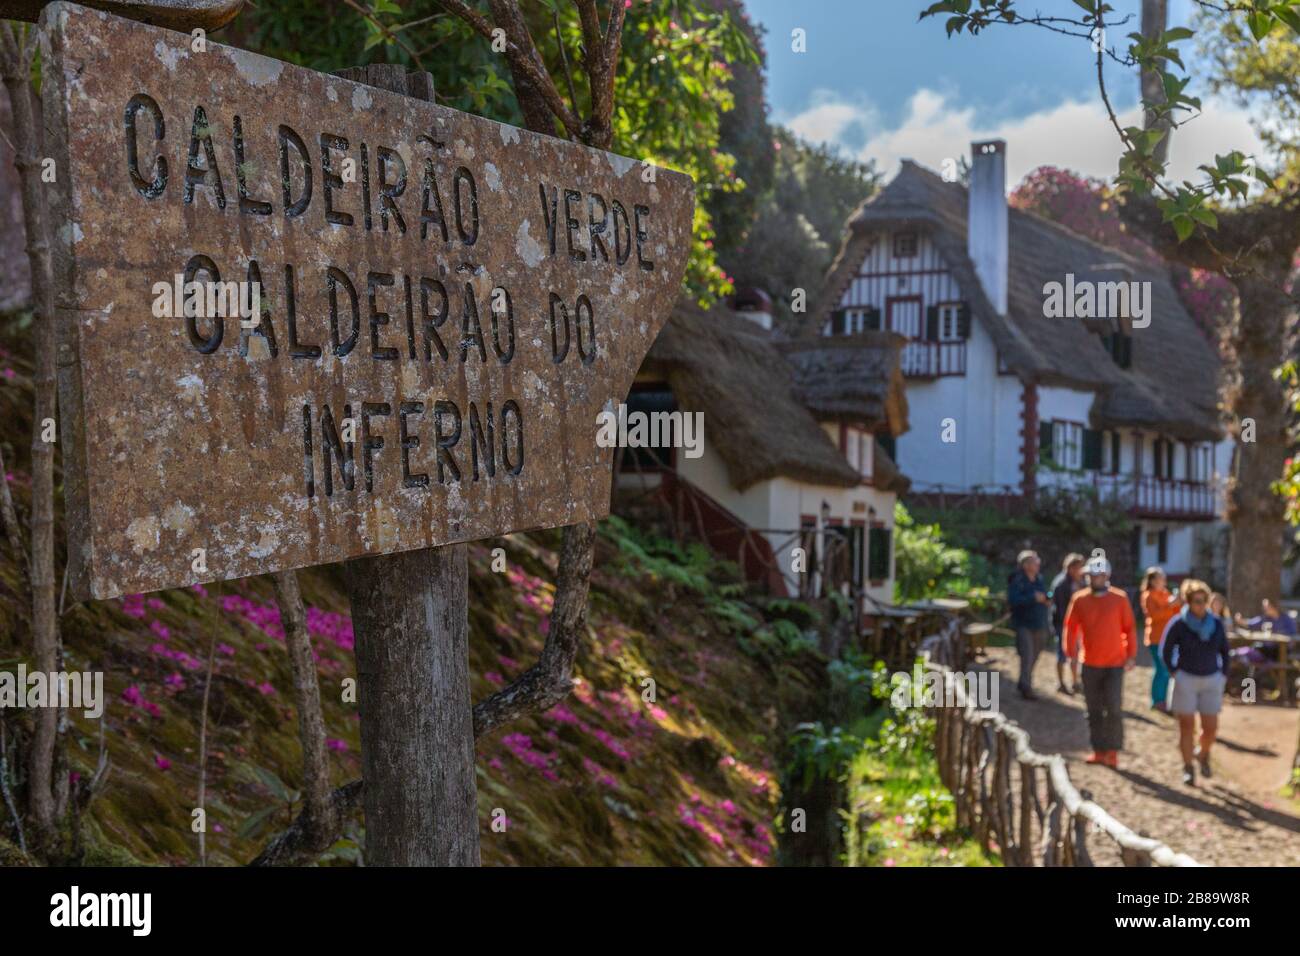 'Parque das Queimadas', the starting point of 'Caldeirao Verde' and 'Caldeirao do Inferno' footpaths Stock Photo